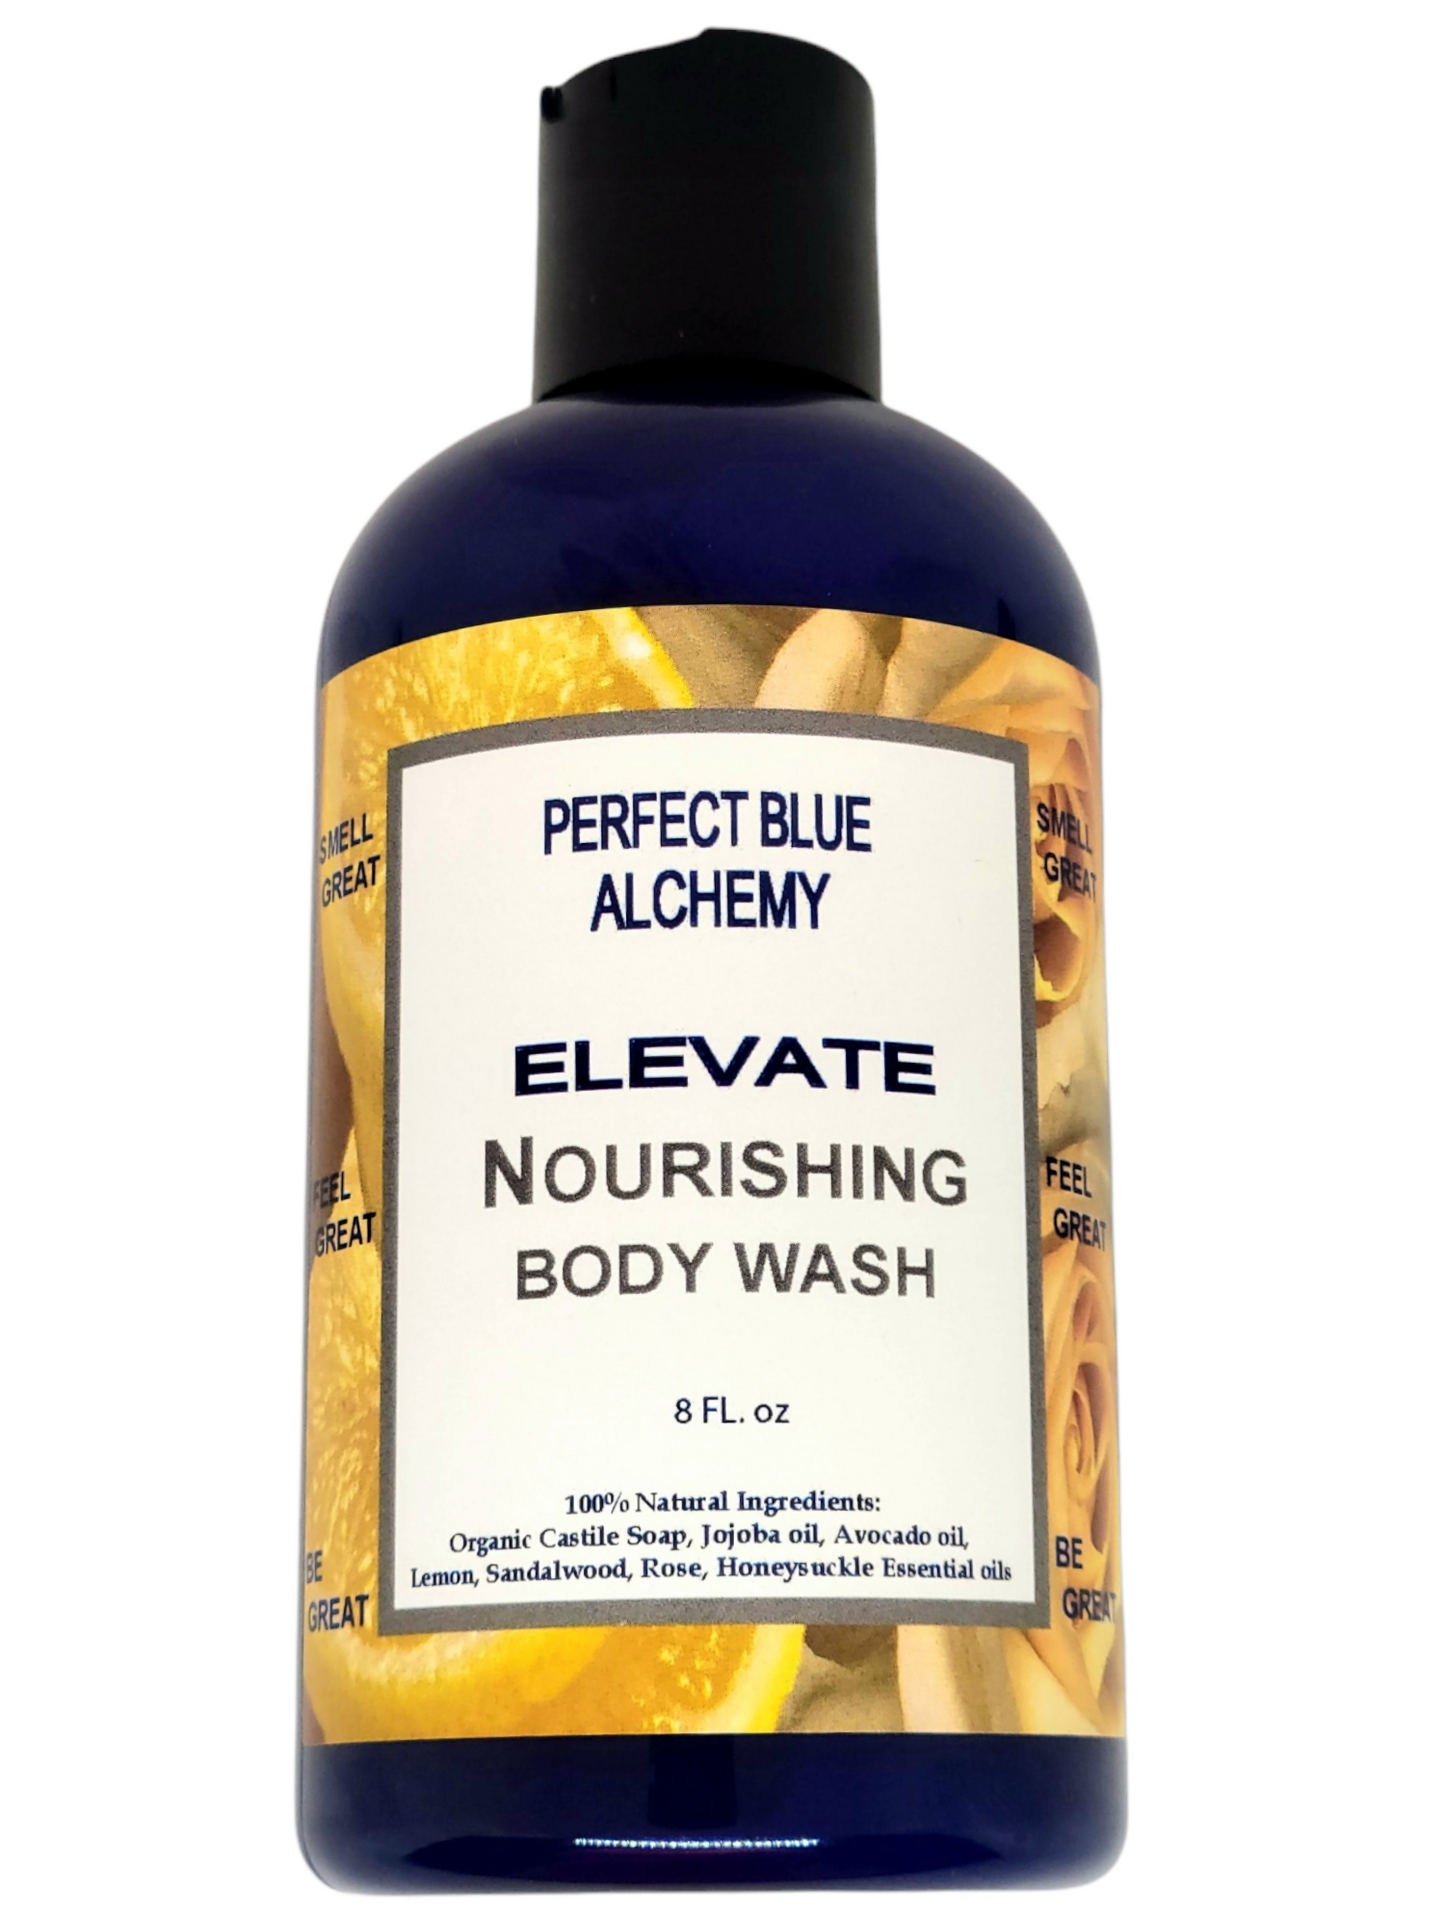 Elevate Nourishing Body Wash